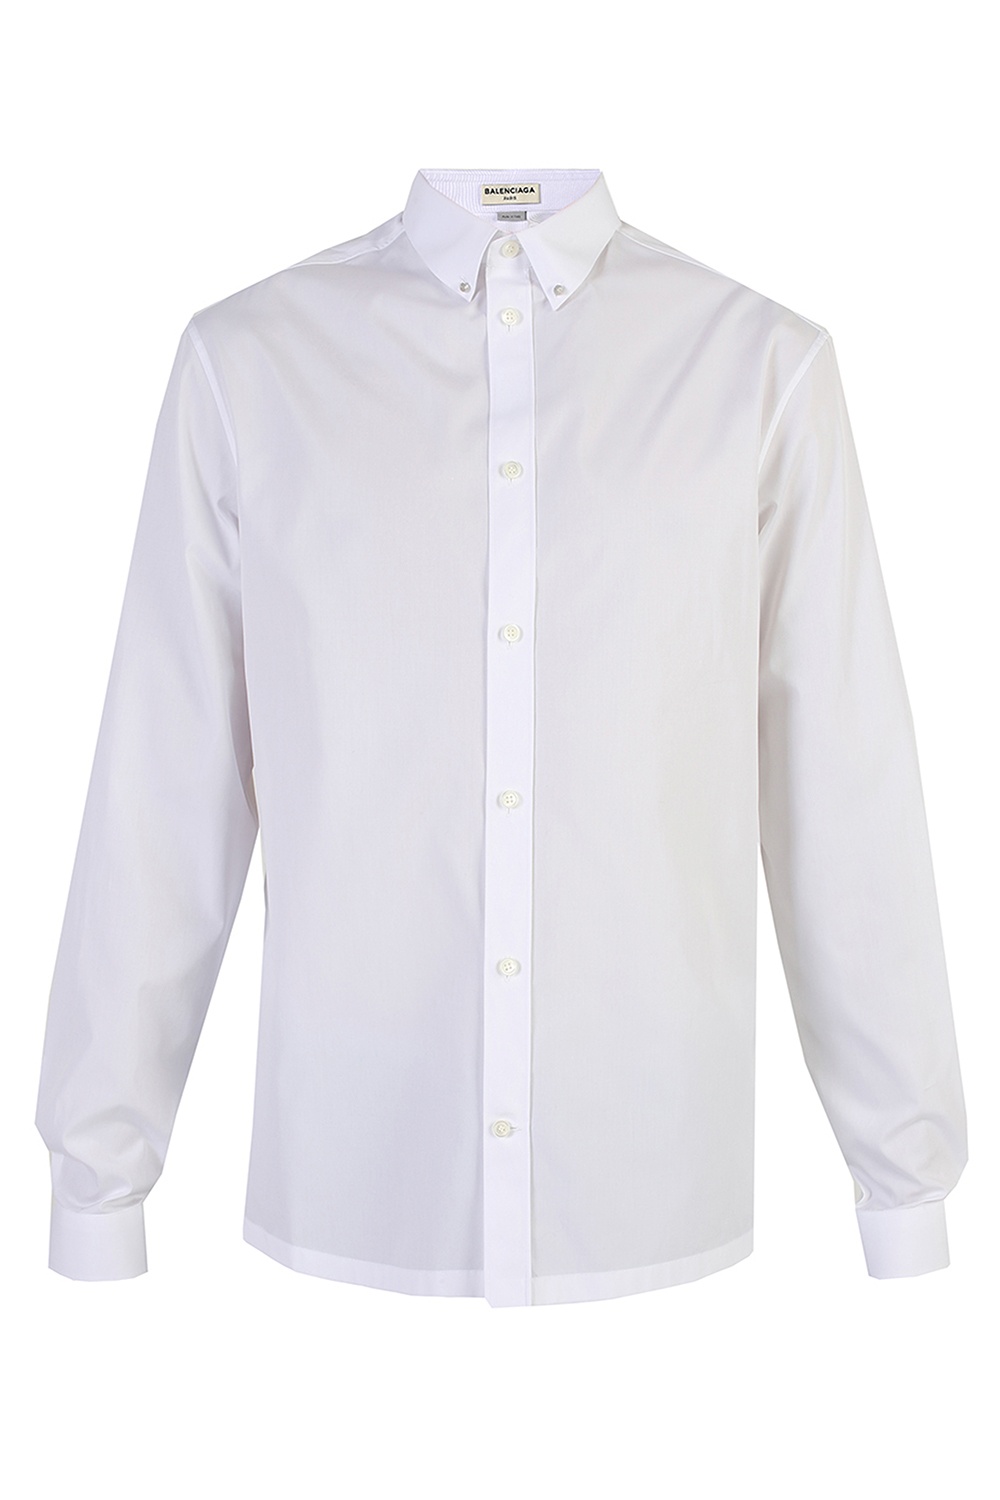 Balenciaga Embellished collar shirt | Men's Clothing | Vitkac